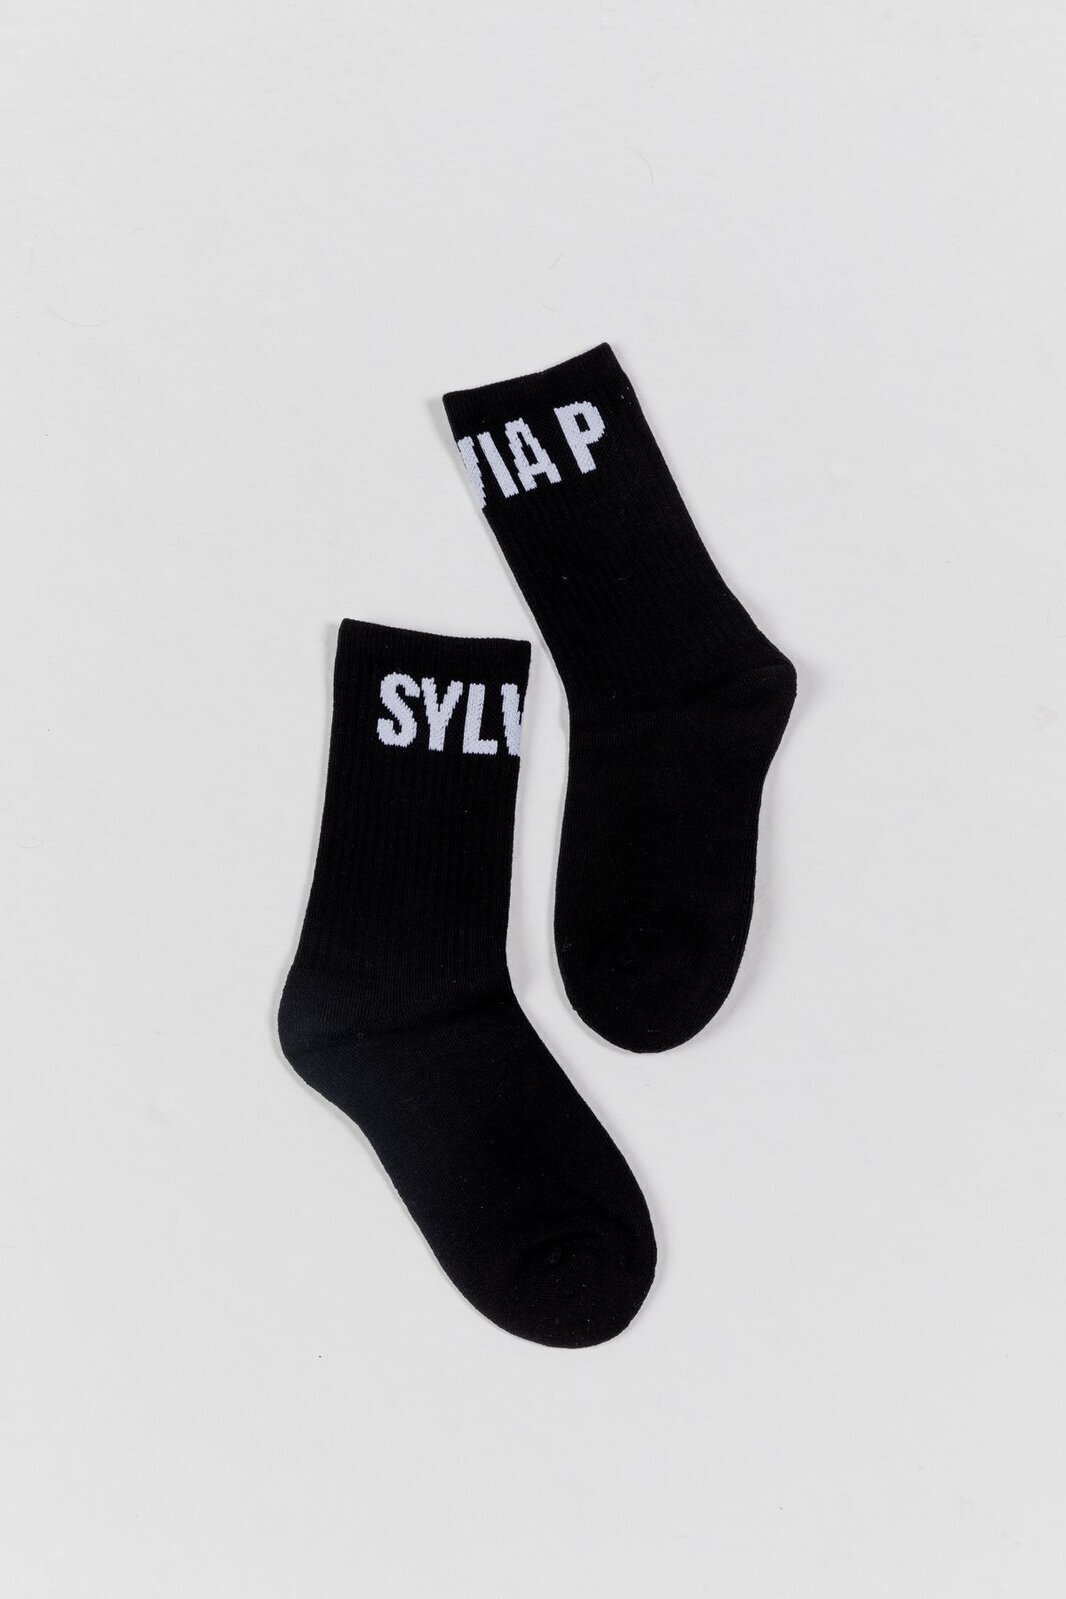 Sylvia P Crew Sock